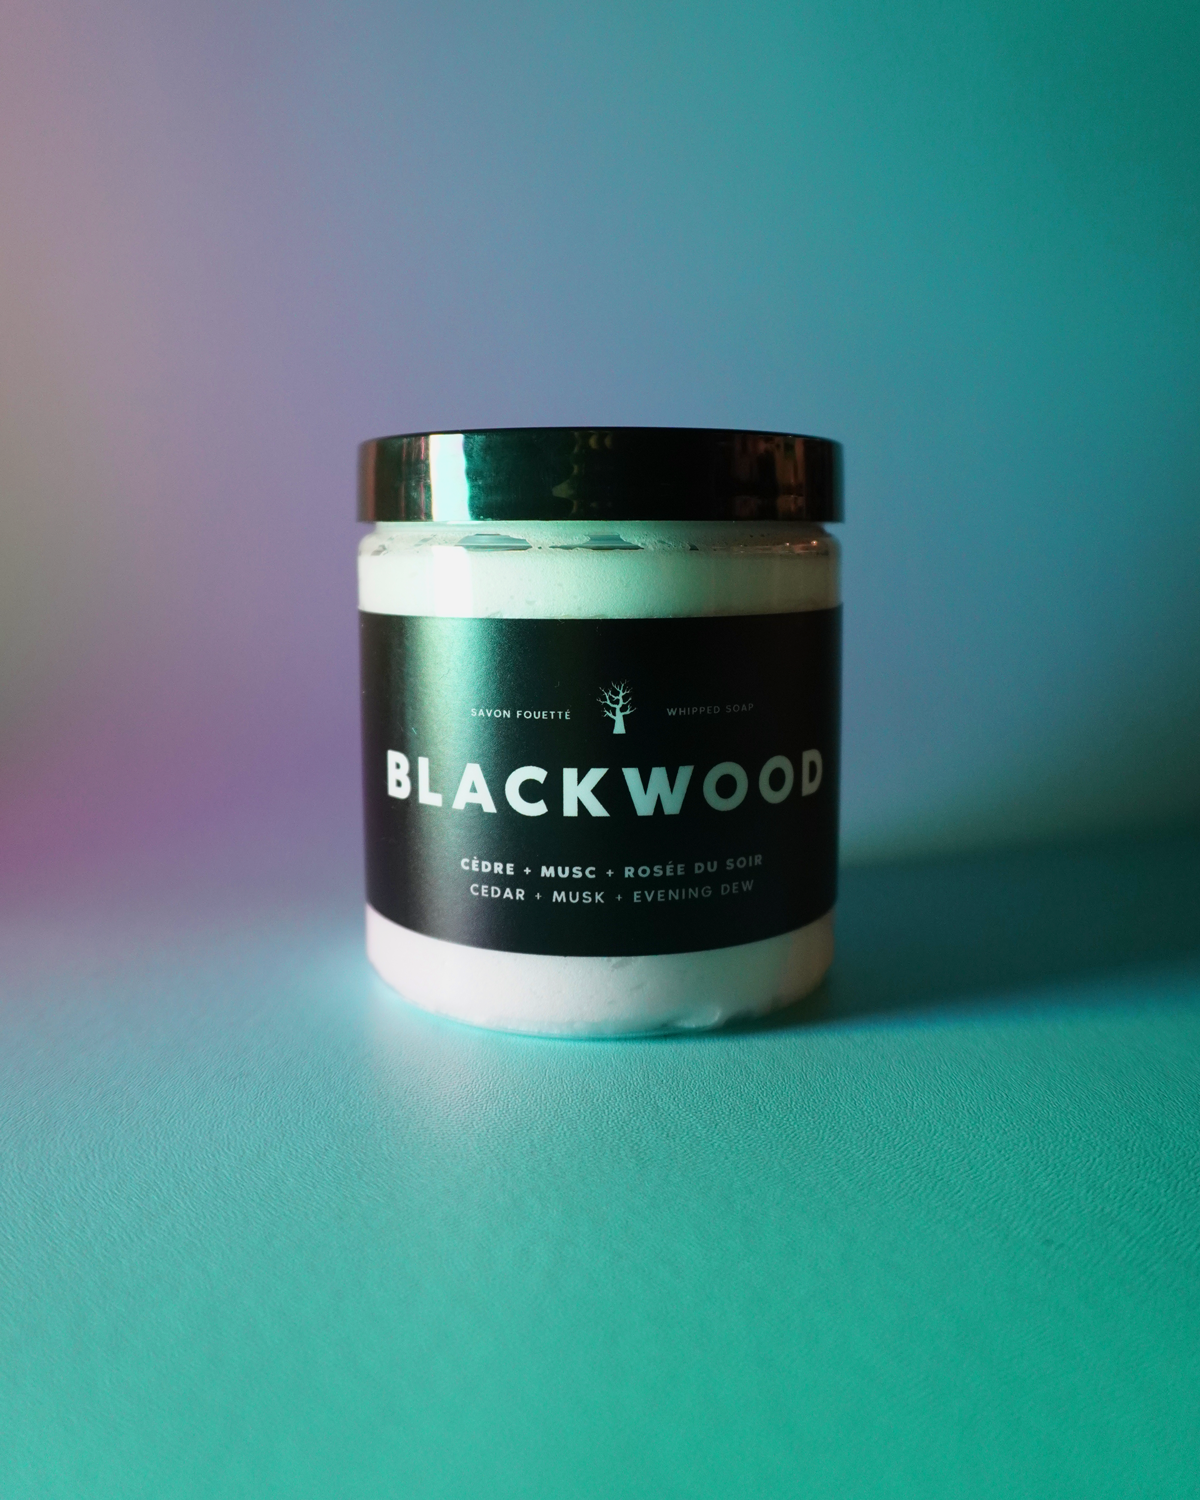 Blackwood Whipped Soap - Cedar + Musk + Evening Dew